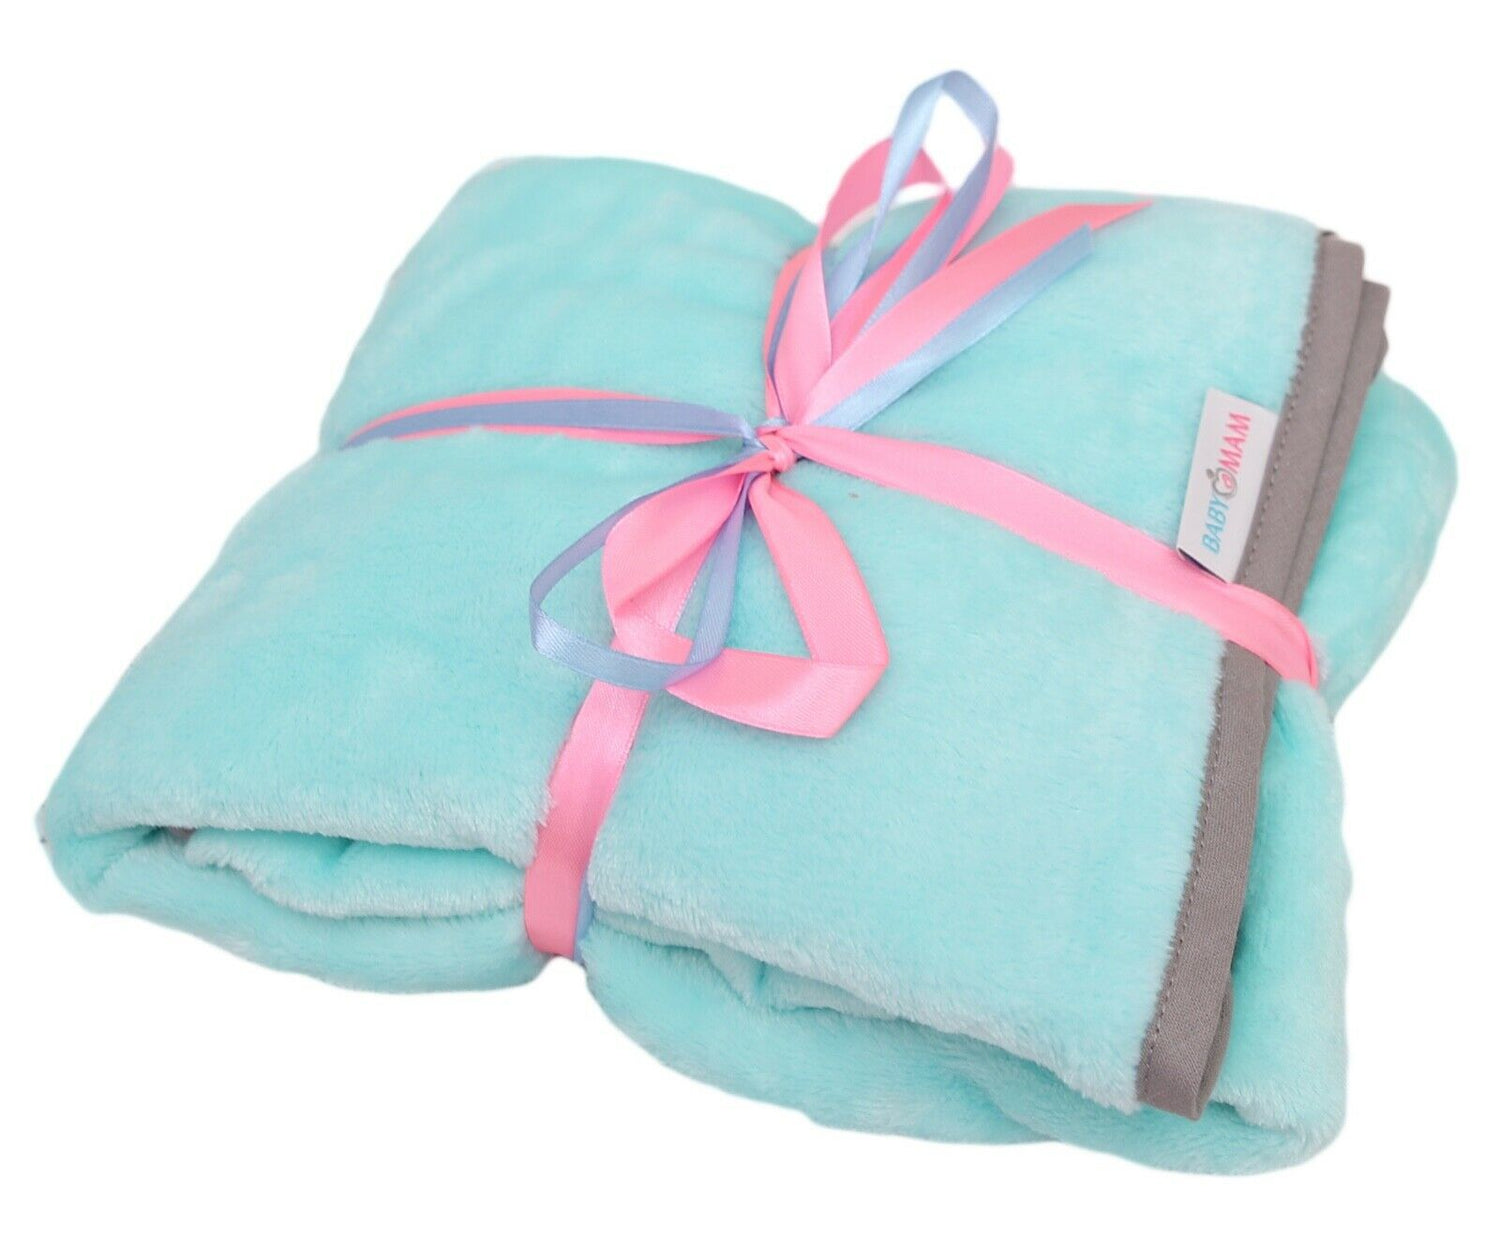 Baby blanket Super soft plush infant nursery cosy baby gift 75x100cm - Mint/Grey